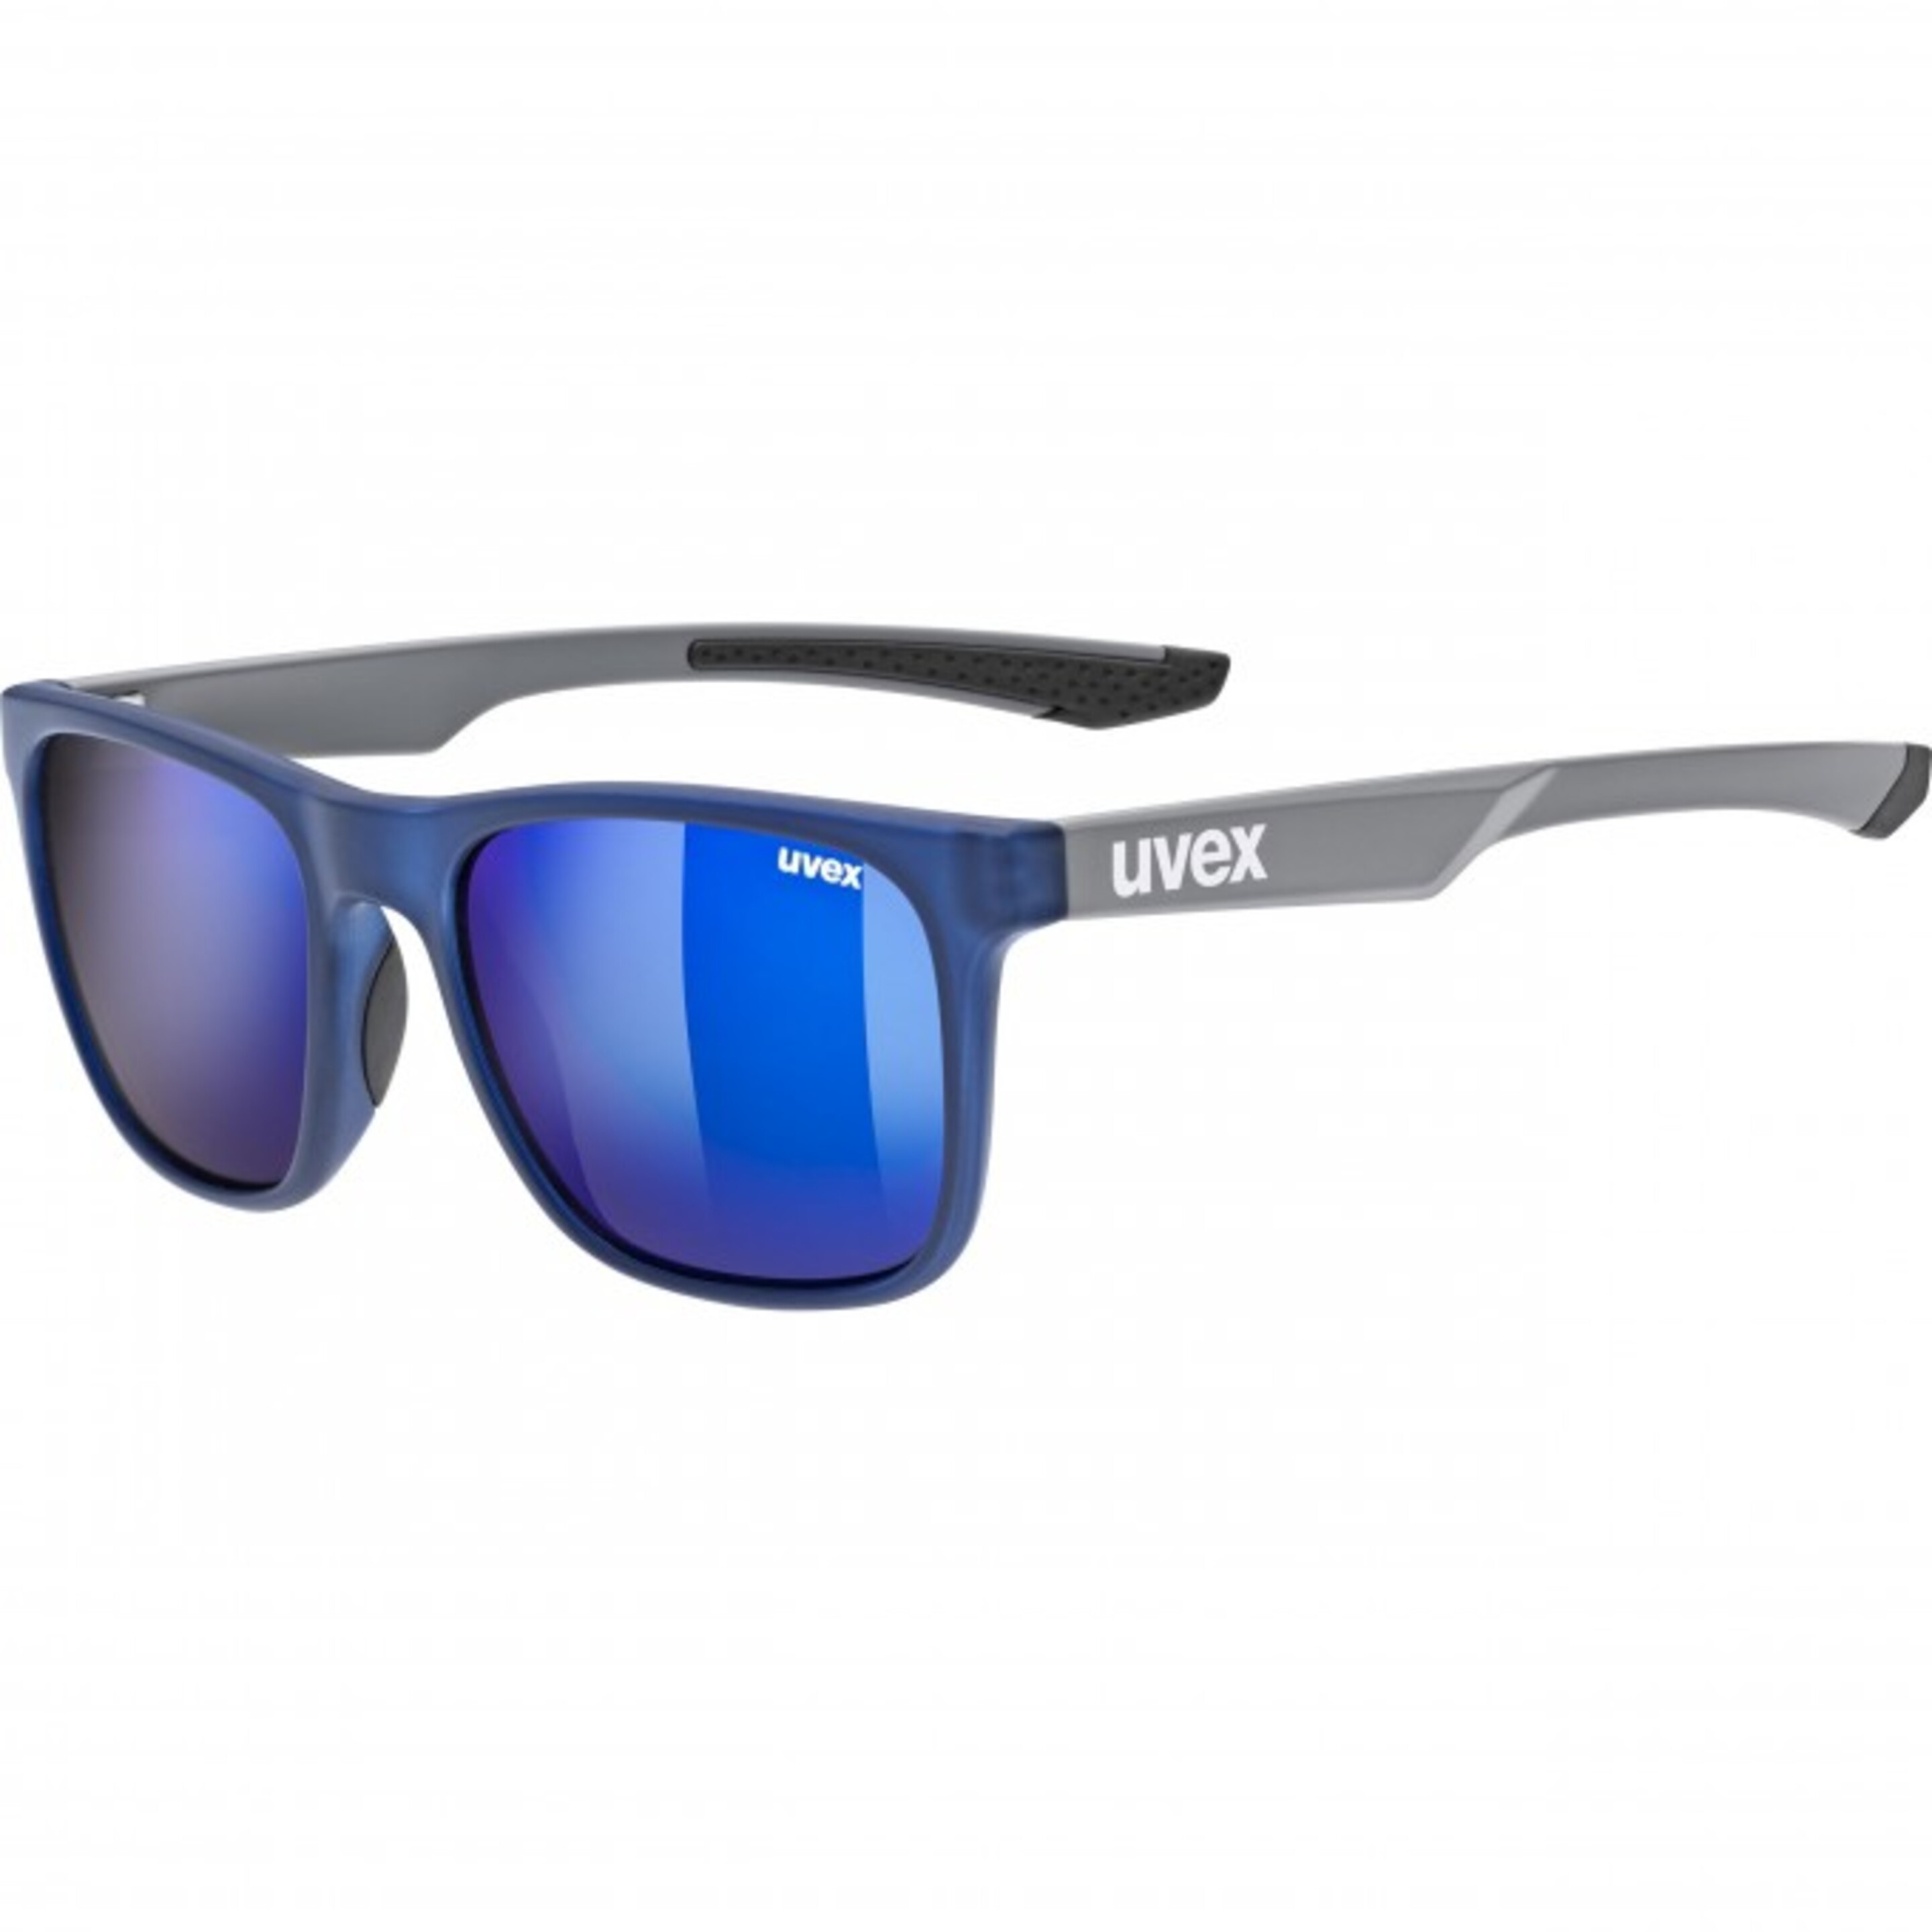 Gafas De Sol Uvex Lgl 42 Blue Grey